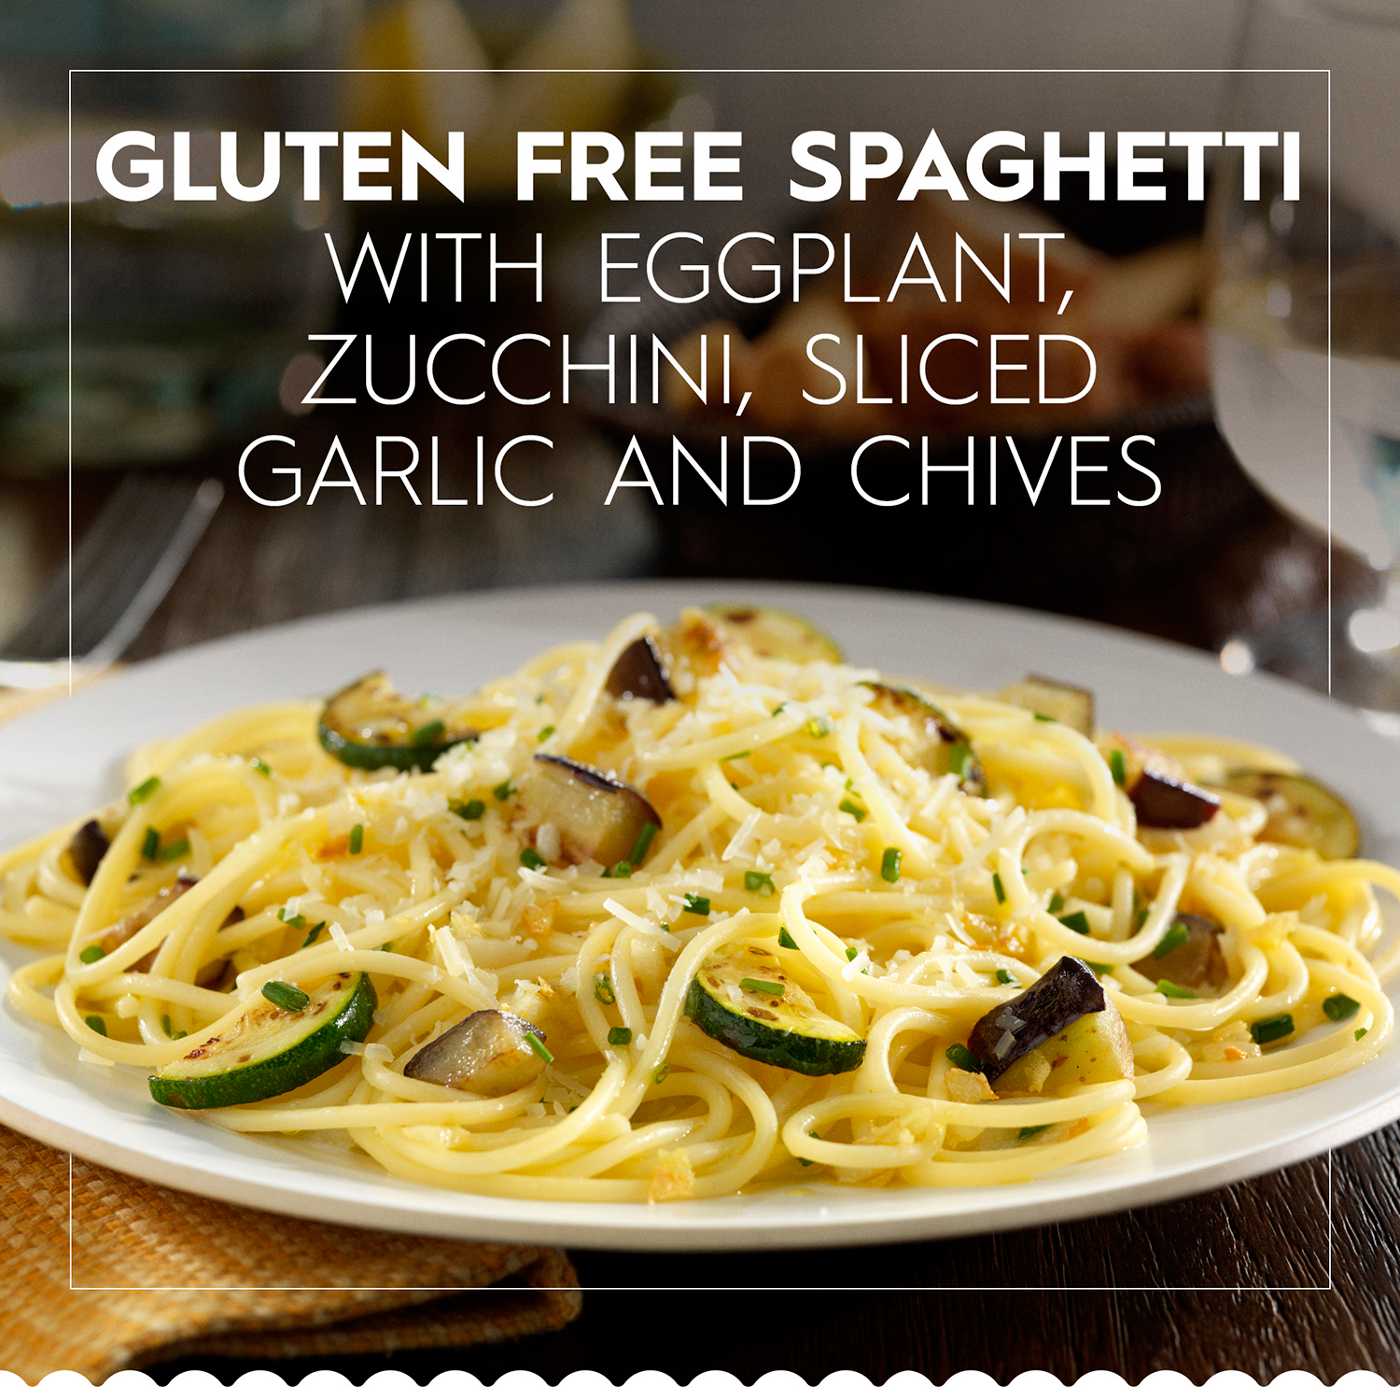 Barilla Gluten Free Spaghetti Pasta - 12oz  Gluten free spaghetti, Barilla  gluten free pasta, Spaghetti pasta